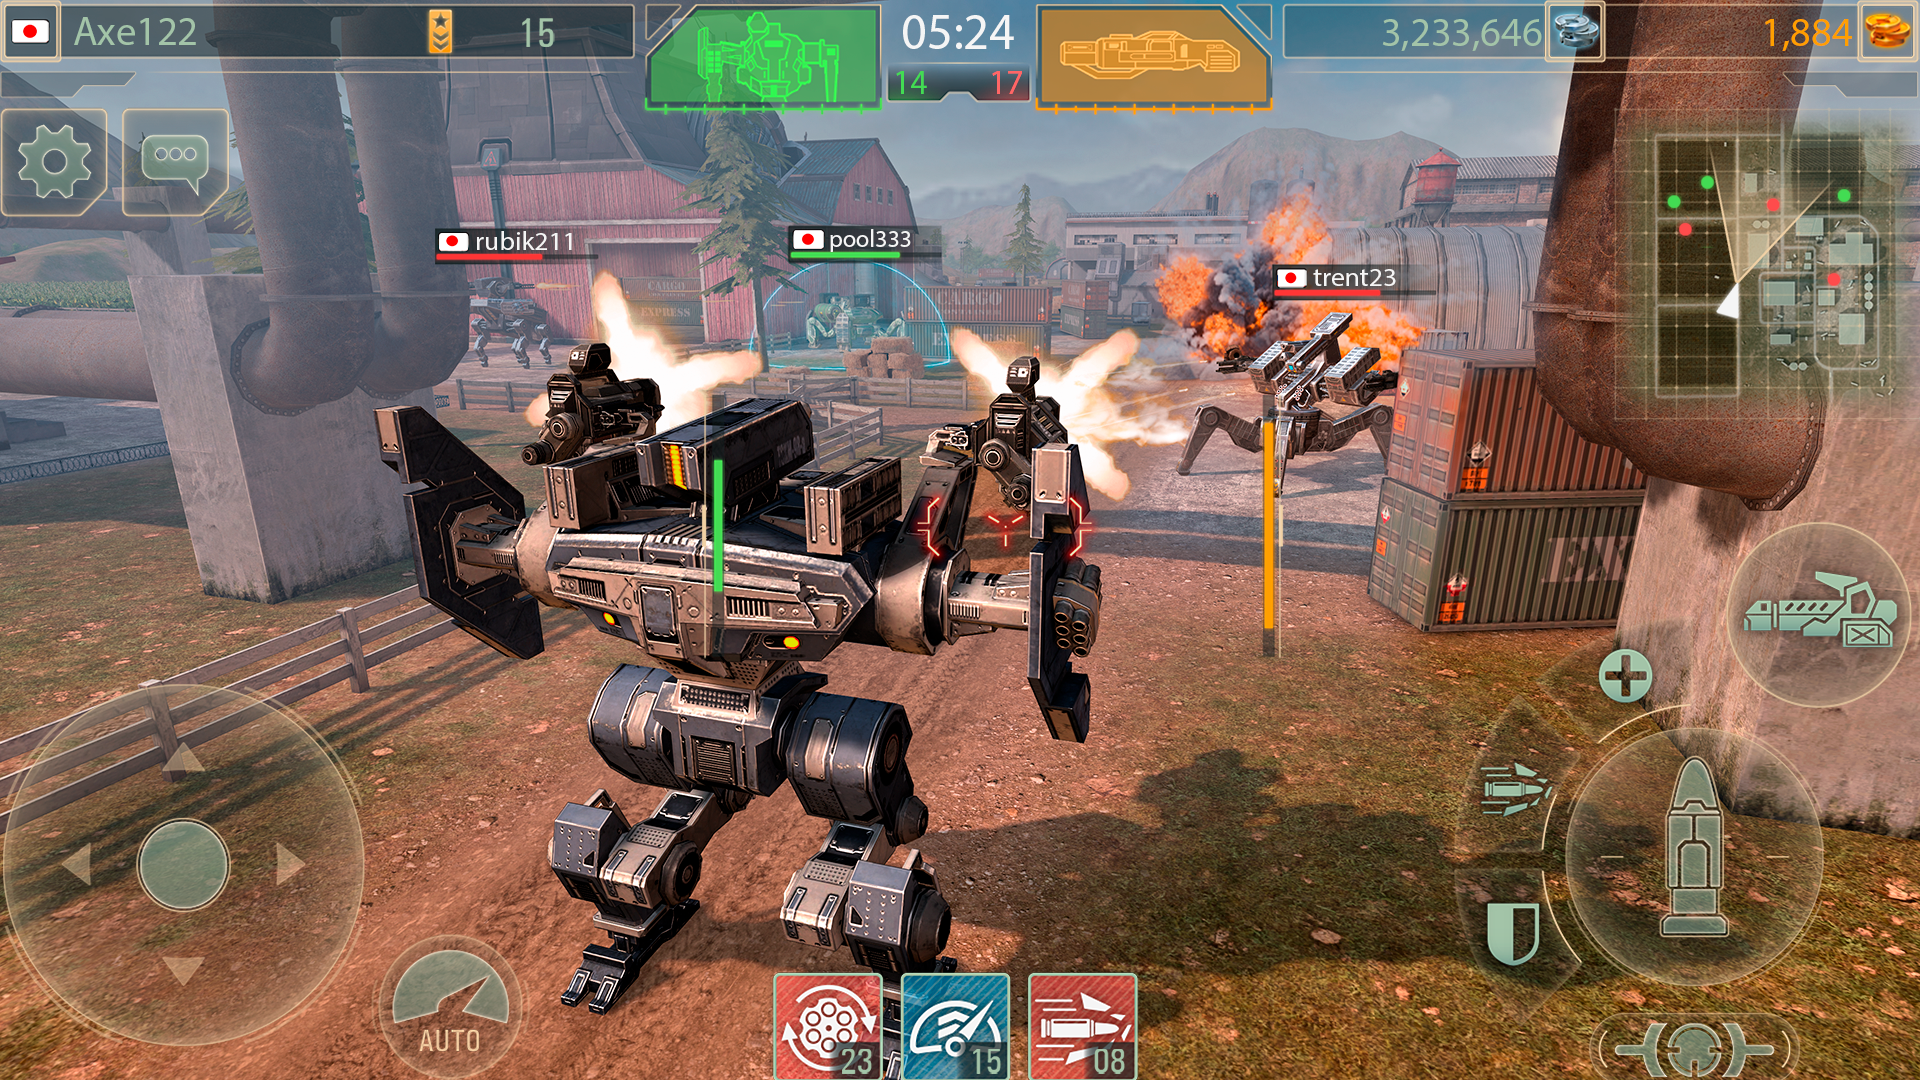 Screenshot 1 of WWR: Juegos de Guerra Robot 3.25.11